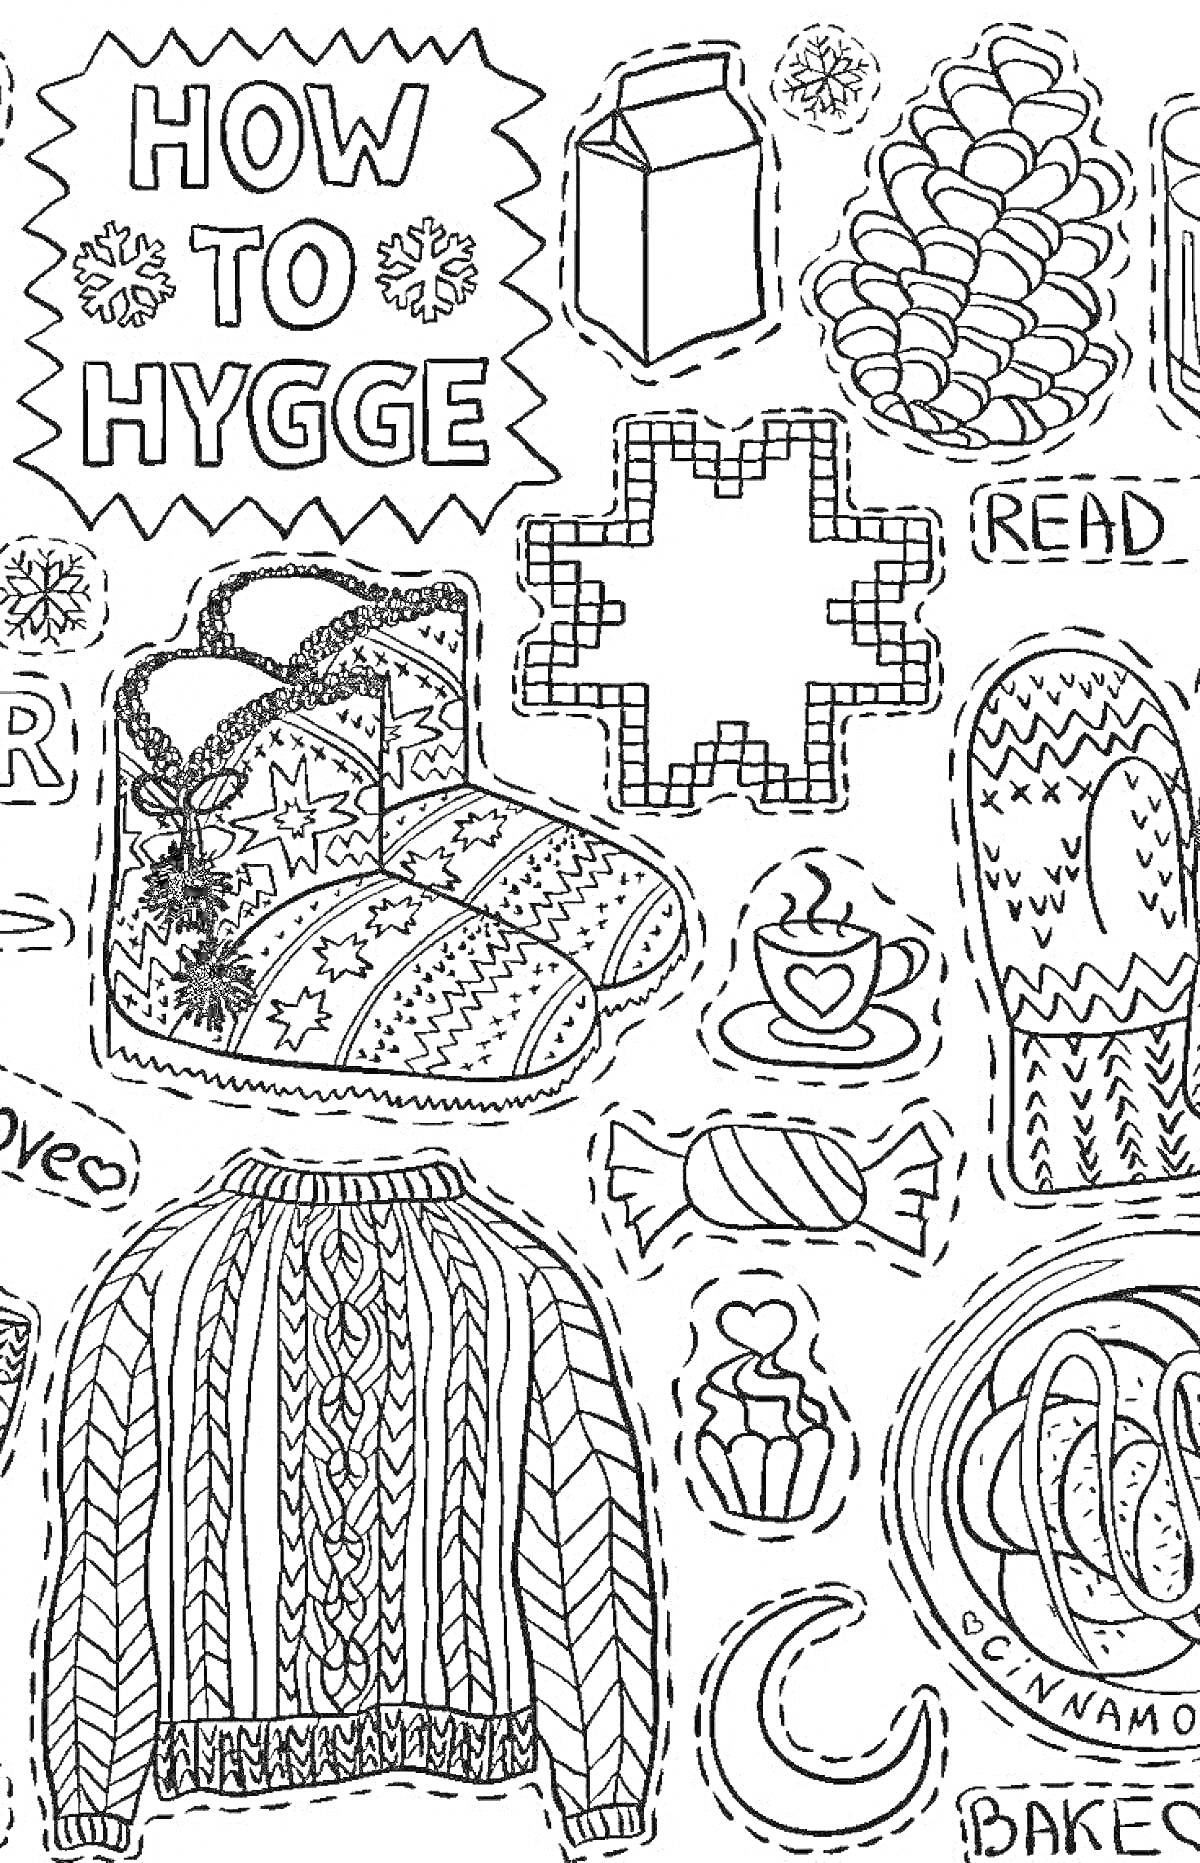 Уют в стиле хюгге: варежки, свитер, носки, горячий напиток, коробка сока, кекс, леденец, подушка, книга, знак 